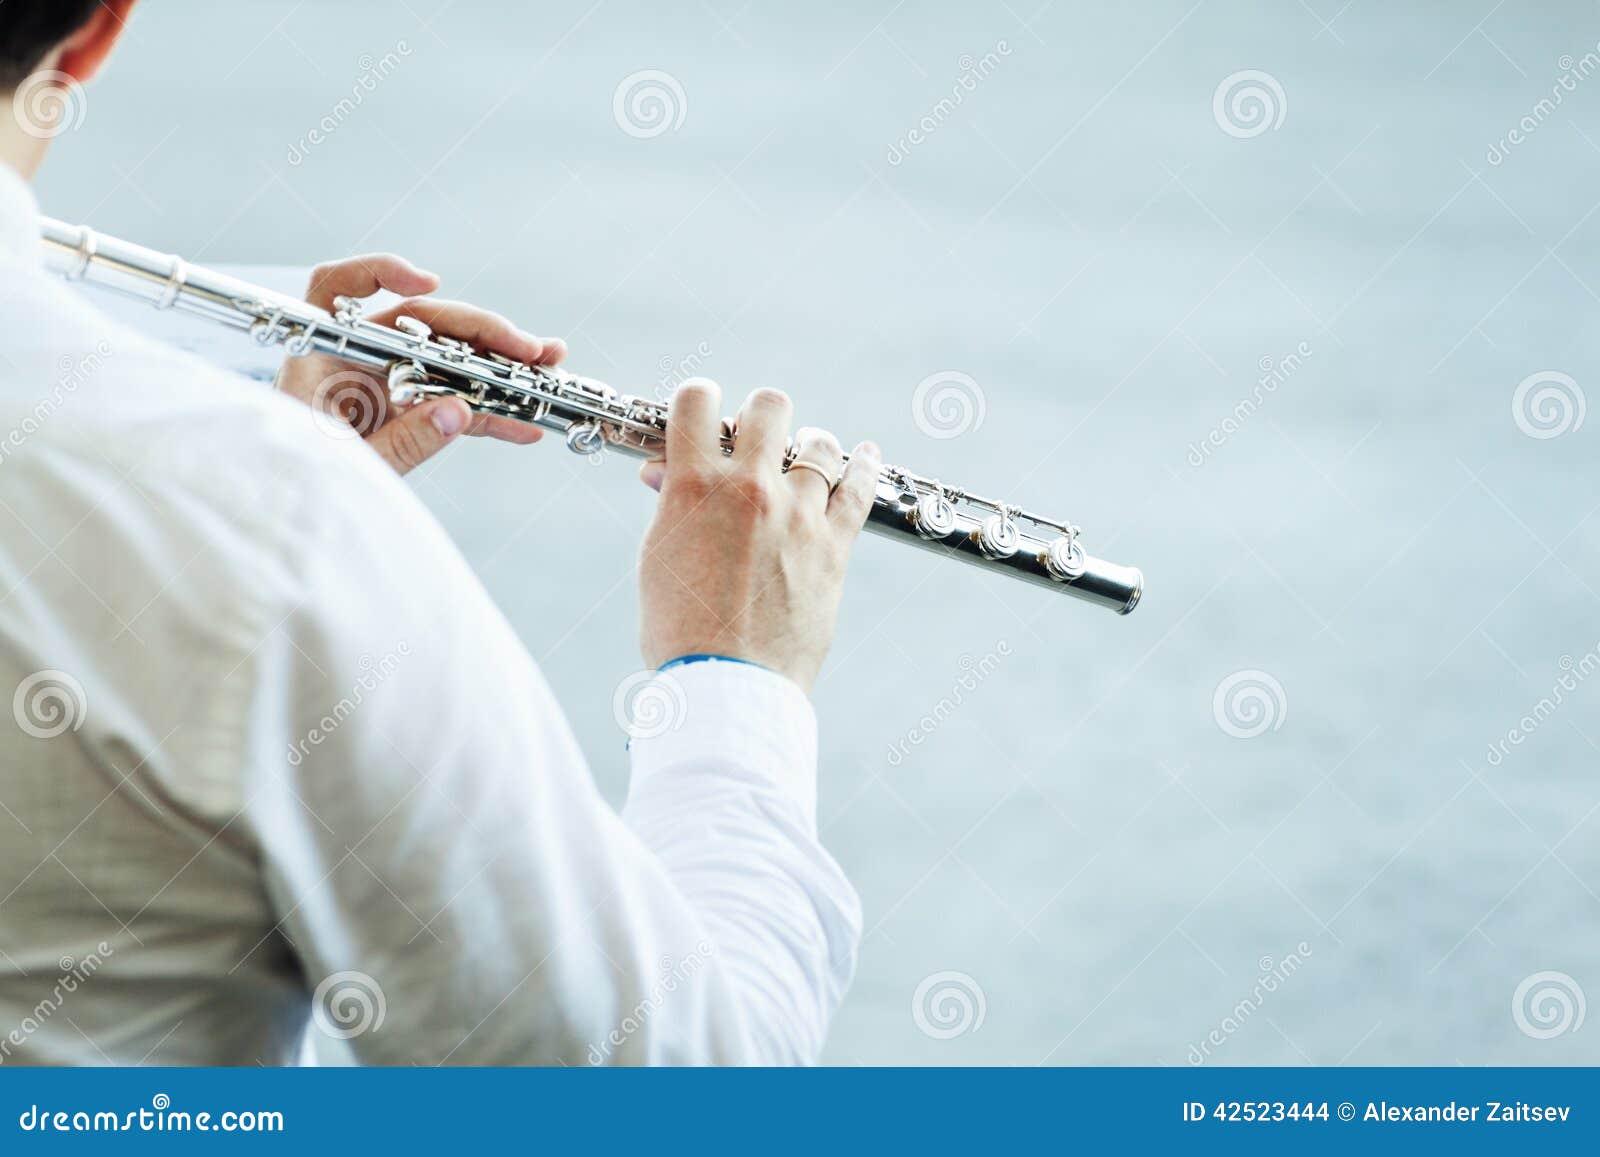 Playing flute. Музыкант с флейтой. Парень играющий на флейте. Флейта красиво. Музыканты играющие на флейте.